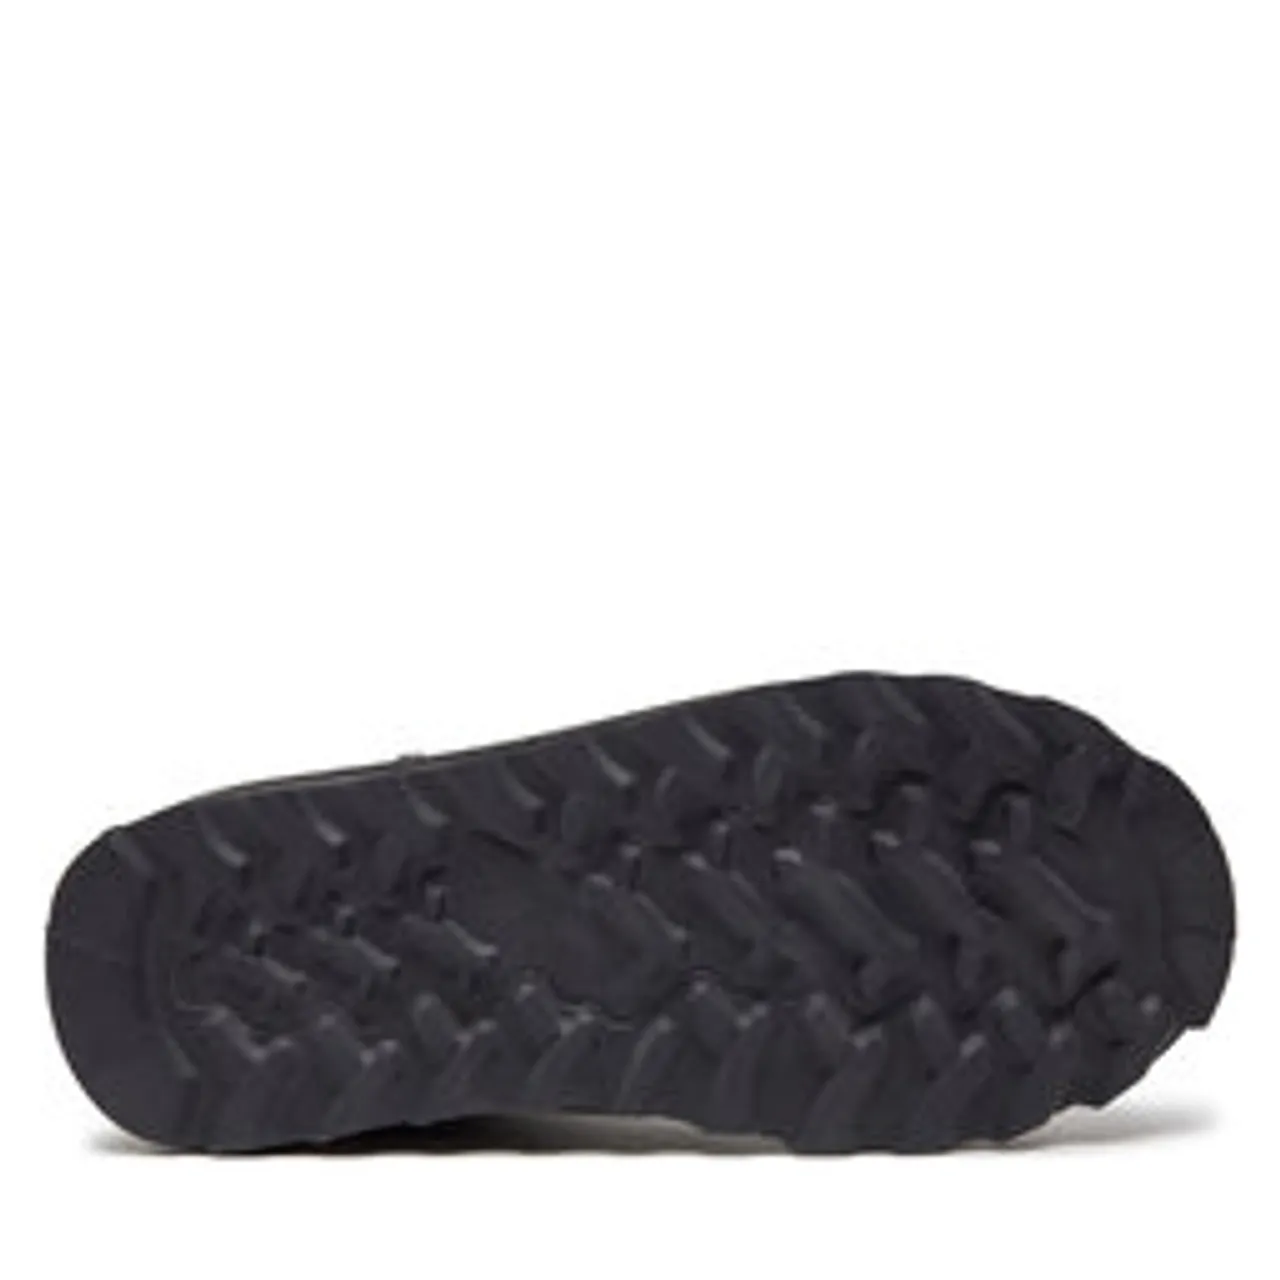 Schuhe Bearpaw Alyssa 2130W Charcoal